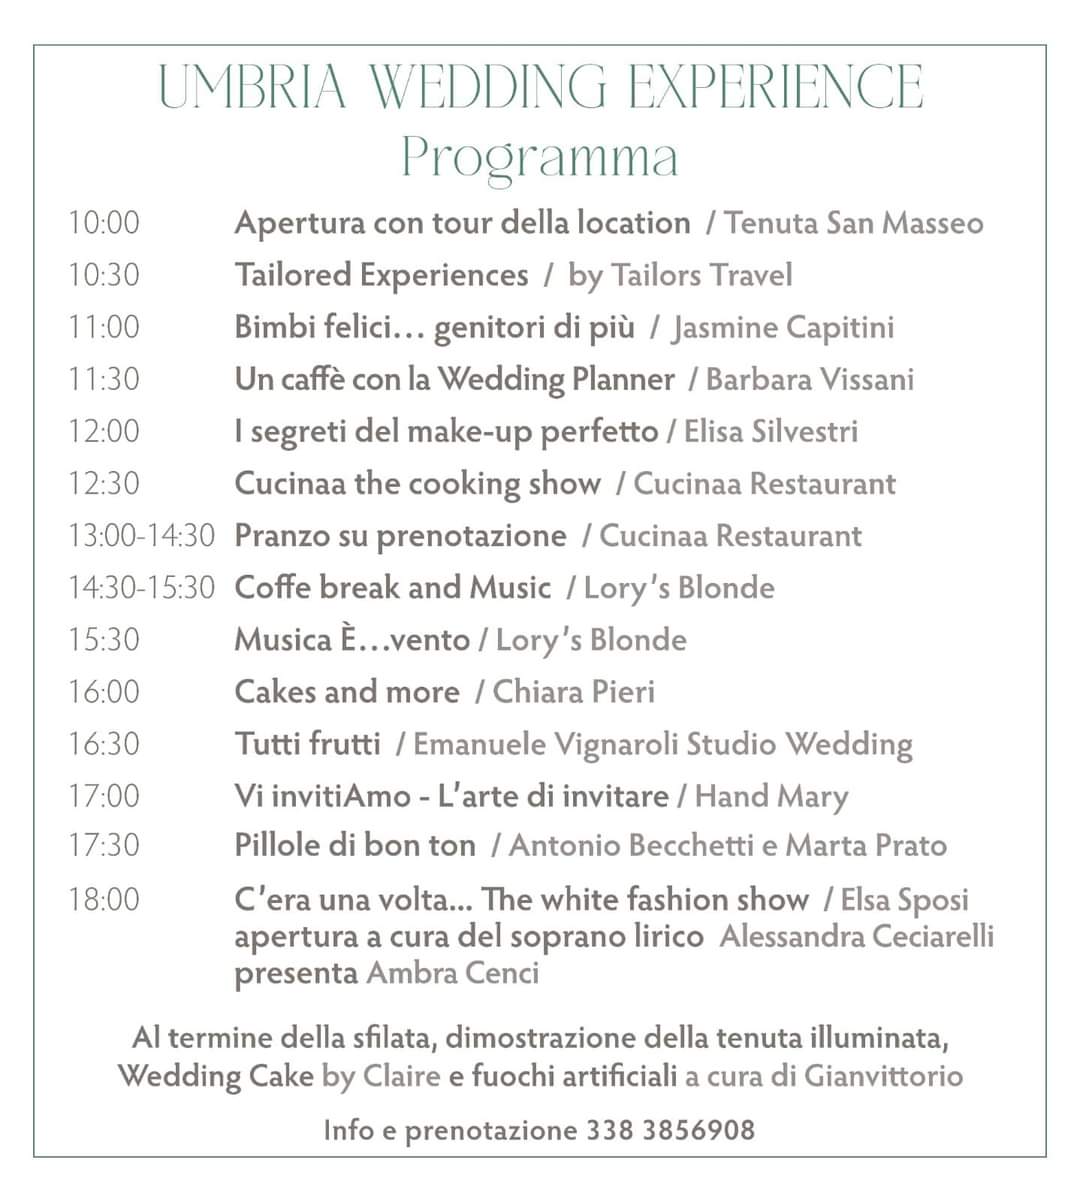 Umbria Wedding Experience